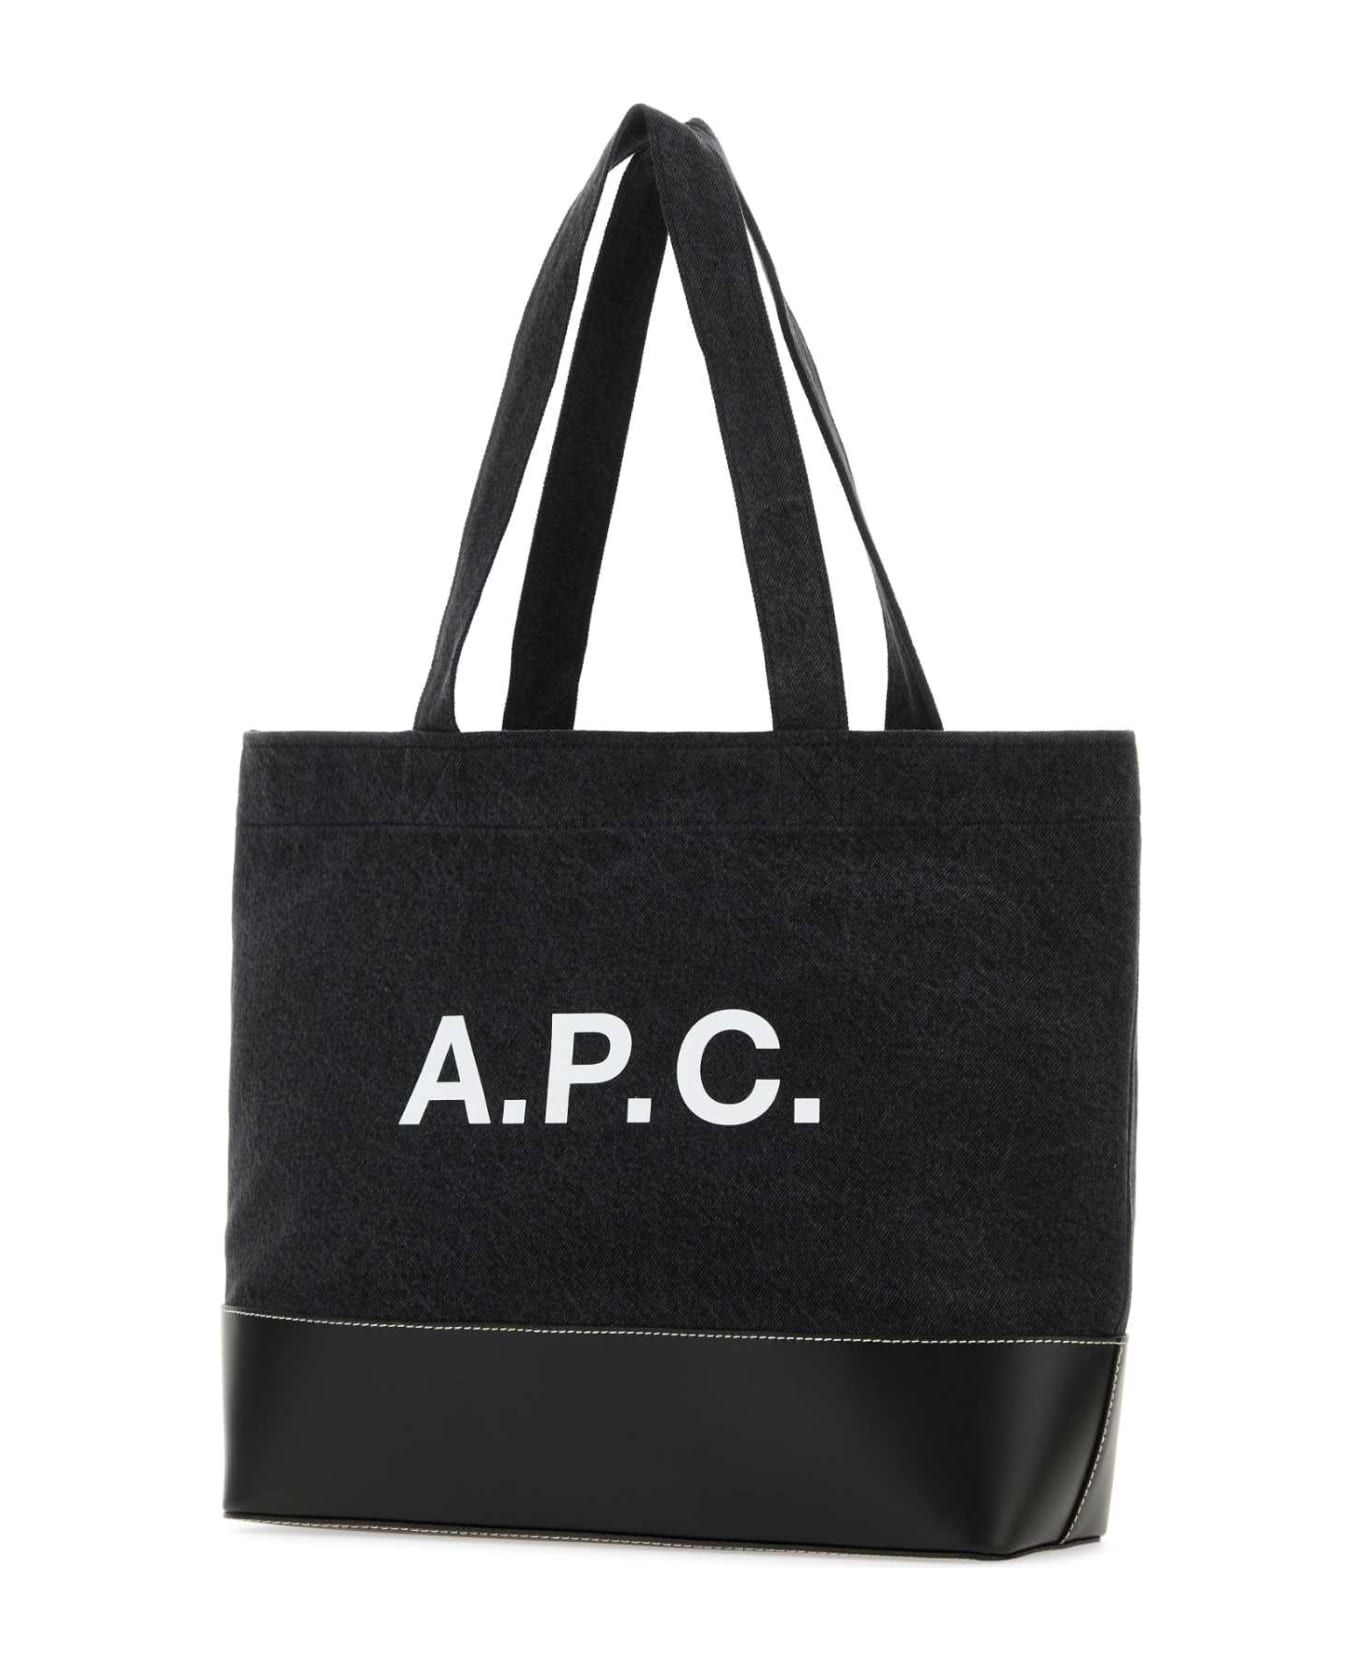 A.P.C. Black Denim And Leather Shopping Bag - Black